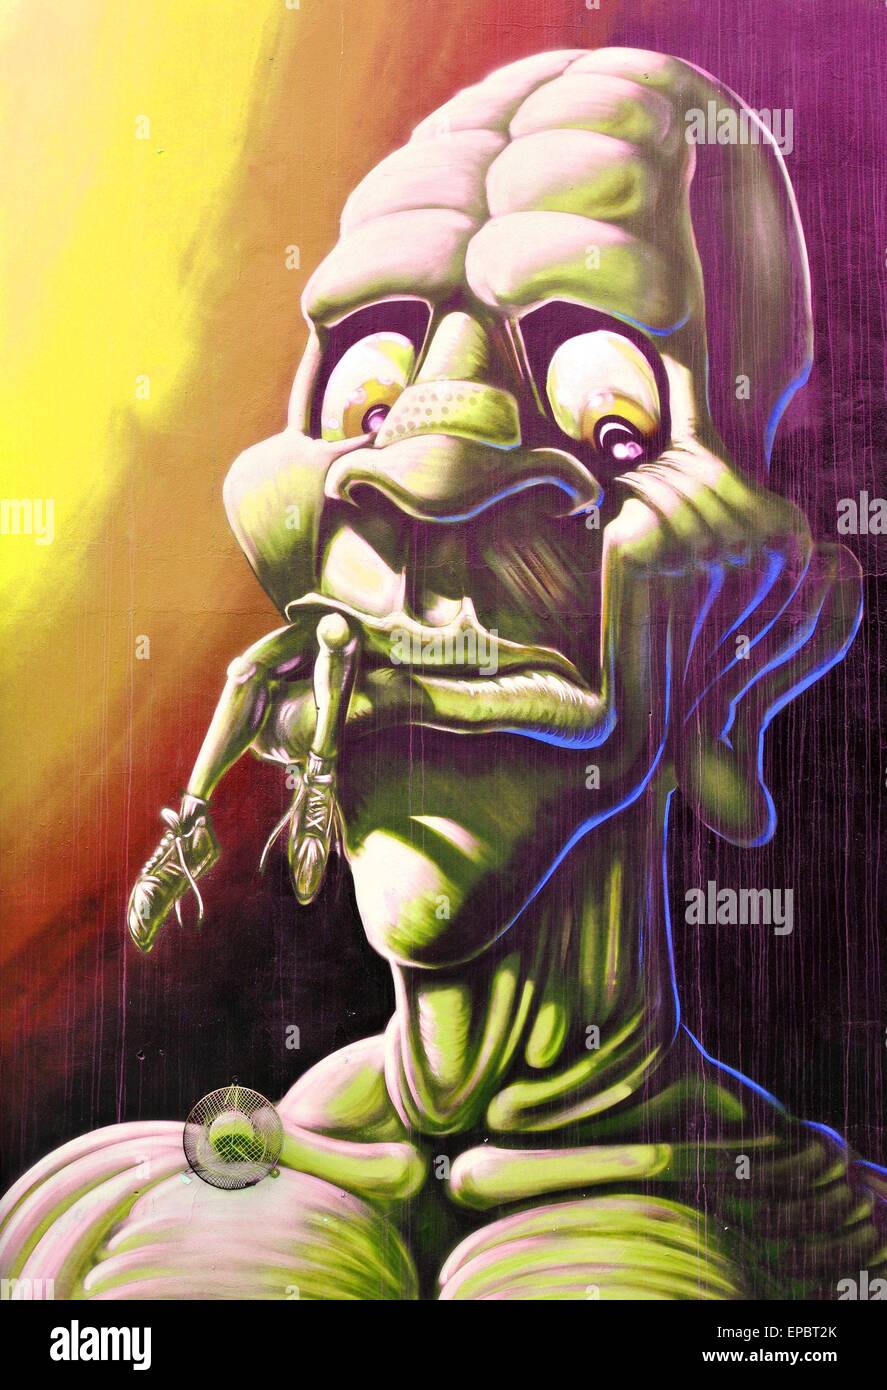 NOTTINGHAM, UK - APRIL 1, 2015: Detail of street art abstract graffiti depicting a monster in Nottingham, East Midlands, England Stock Photo